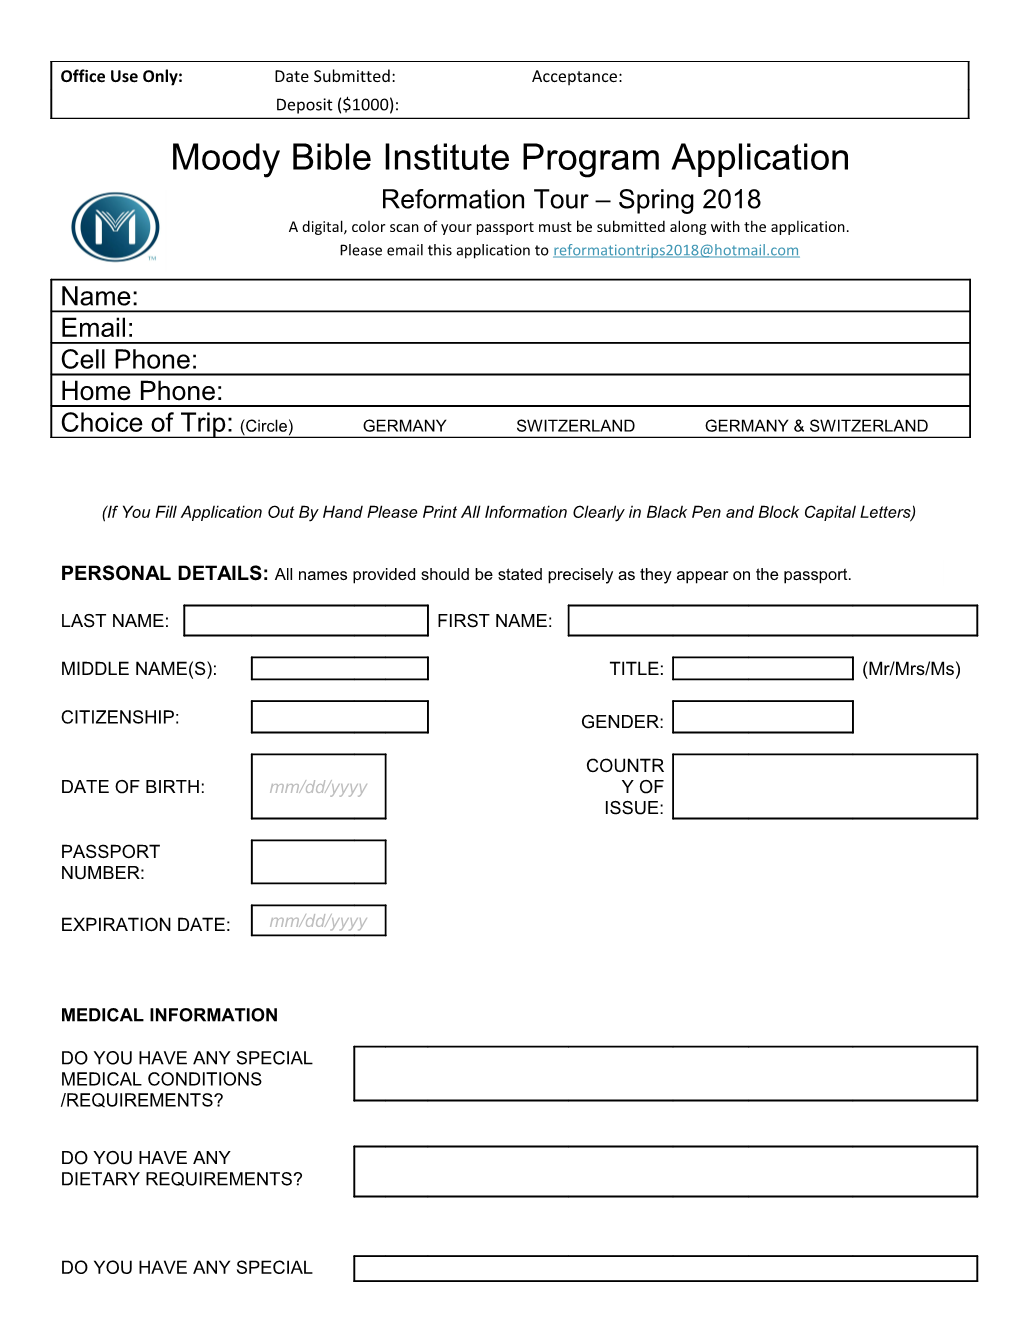 MBI International Study Program Application